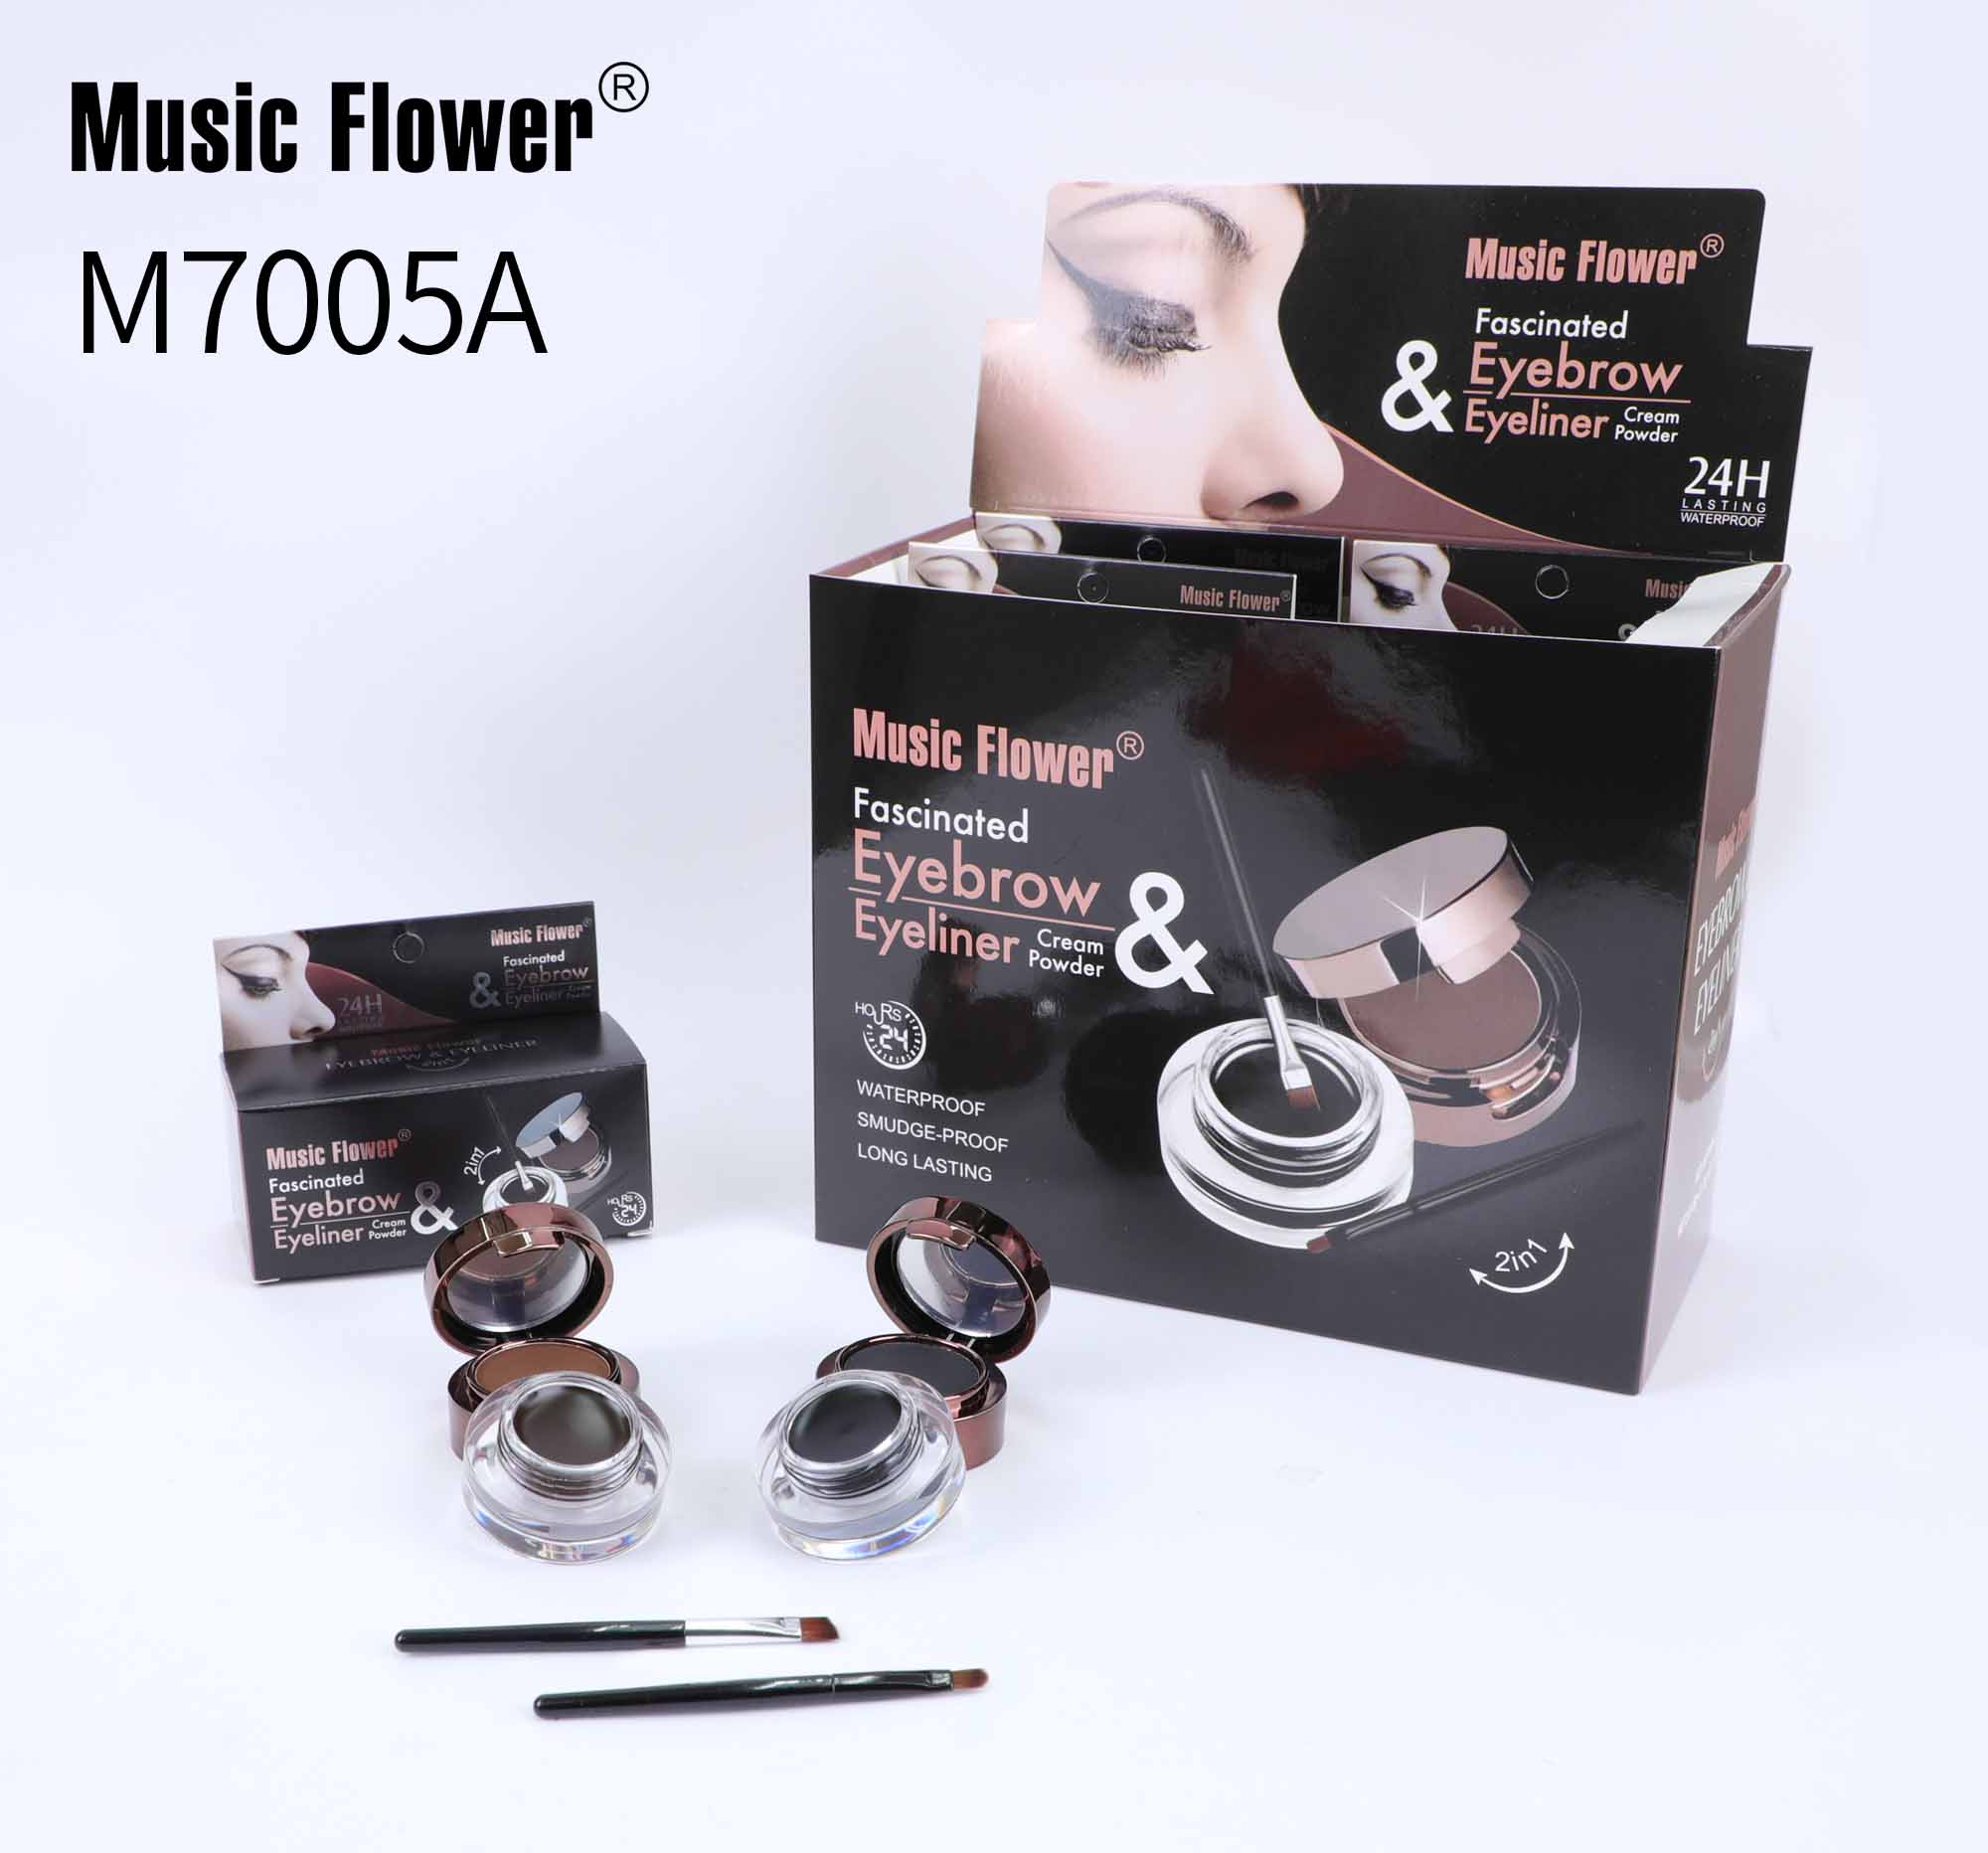 MUSIC FLOWER EYELINER GEL M7005A